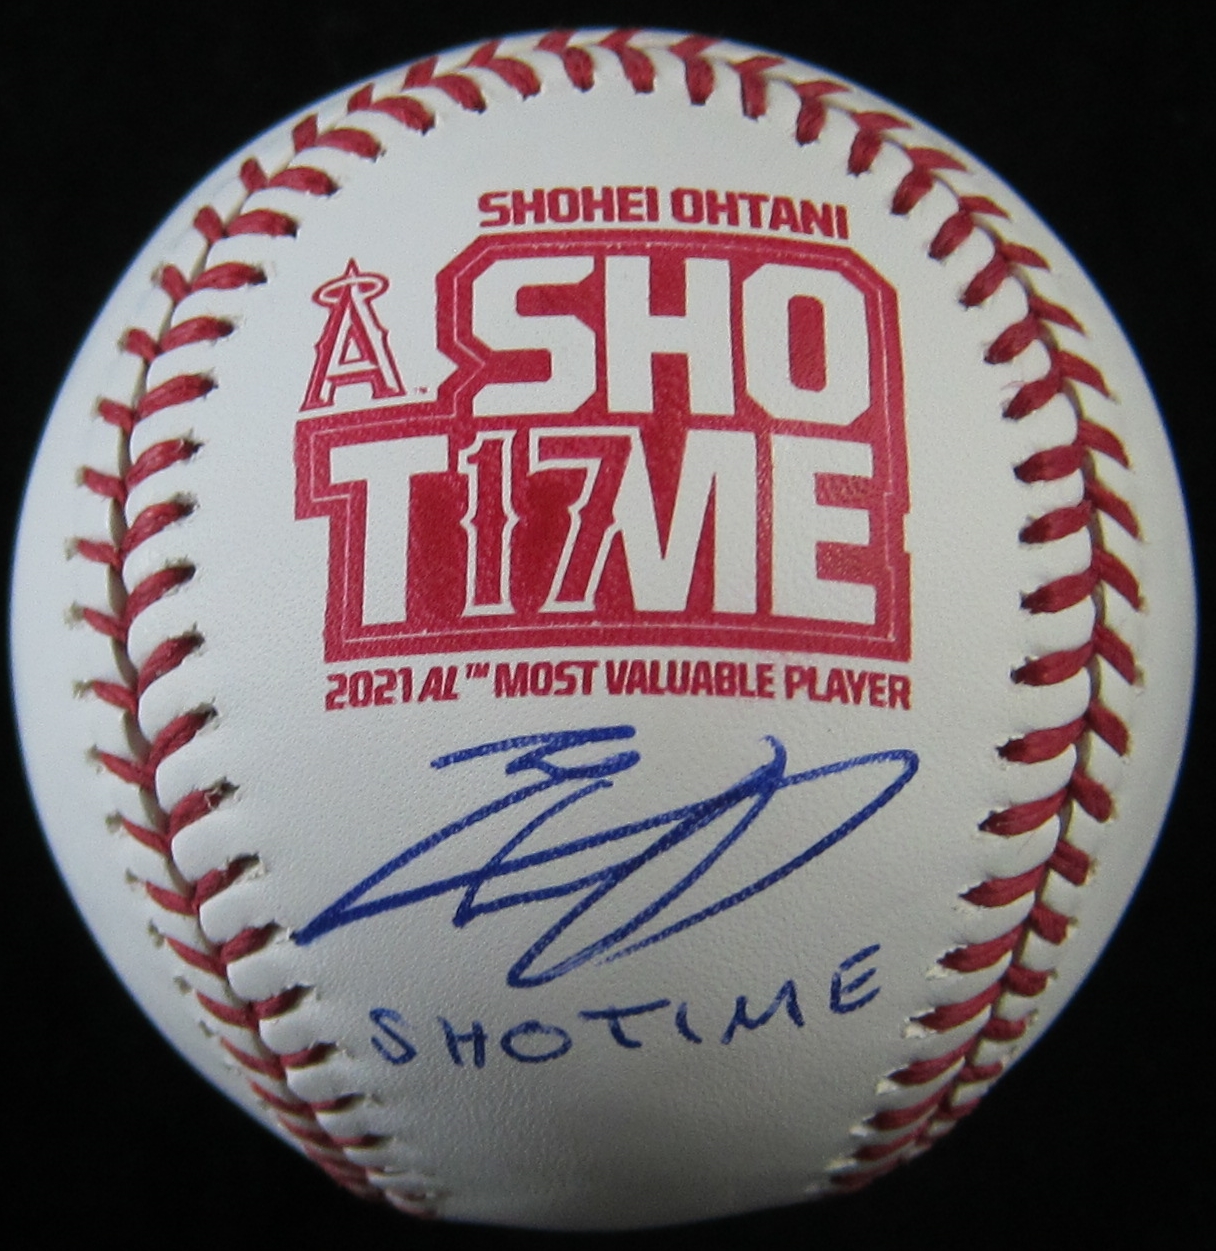 Shohei Ohtani Signed And Inscribed Baseball Memorabilia Center